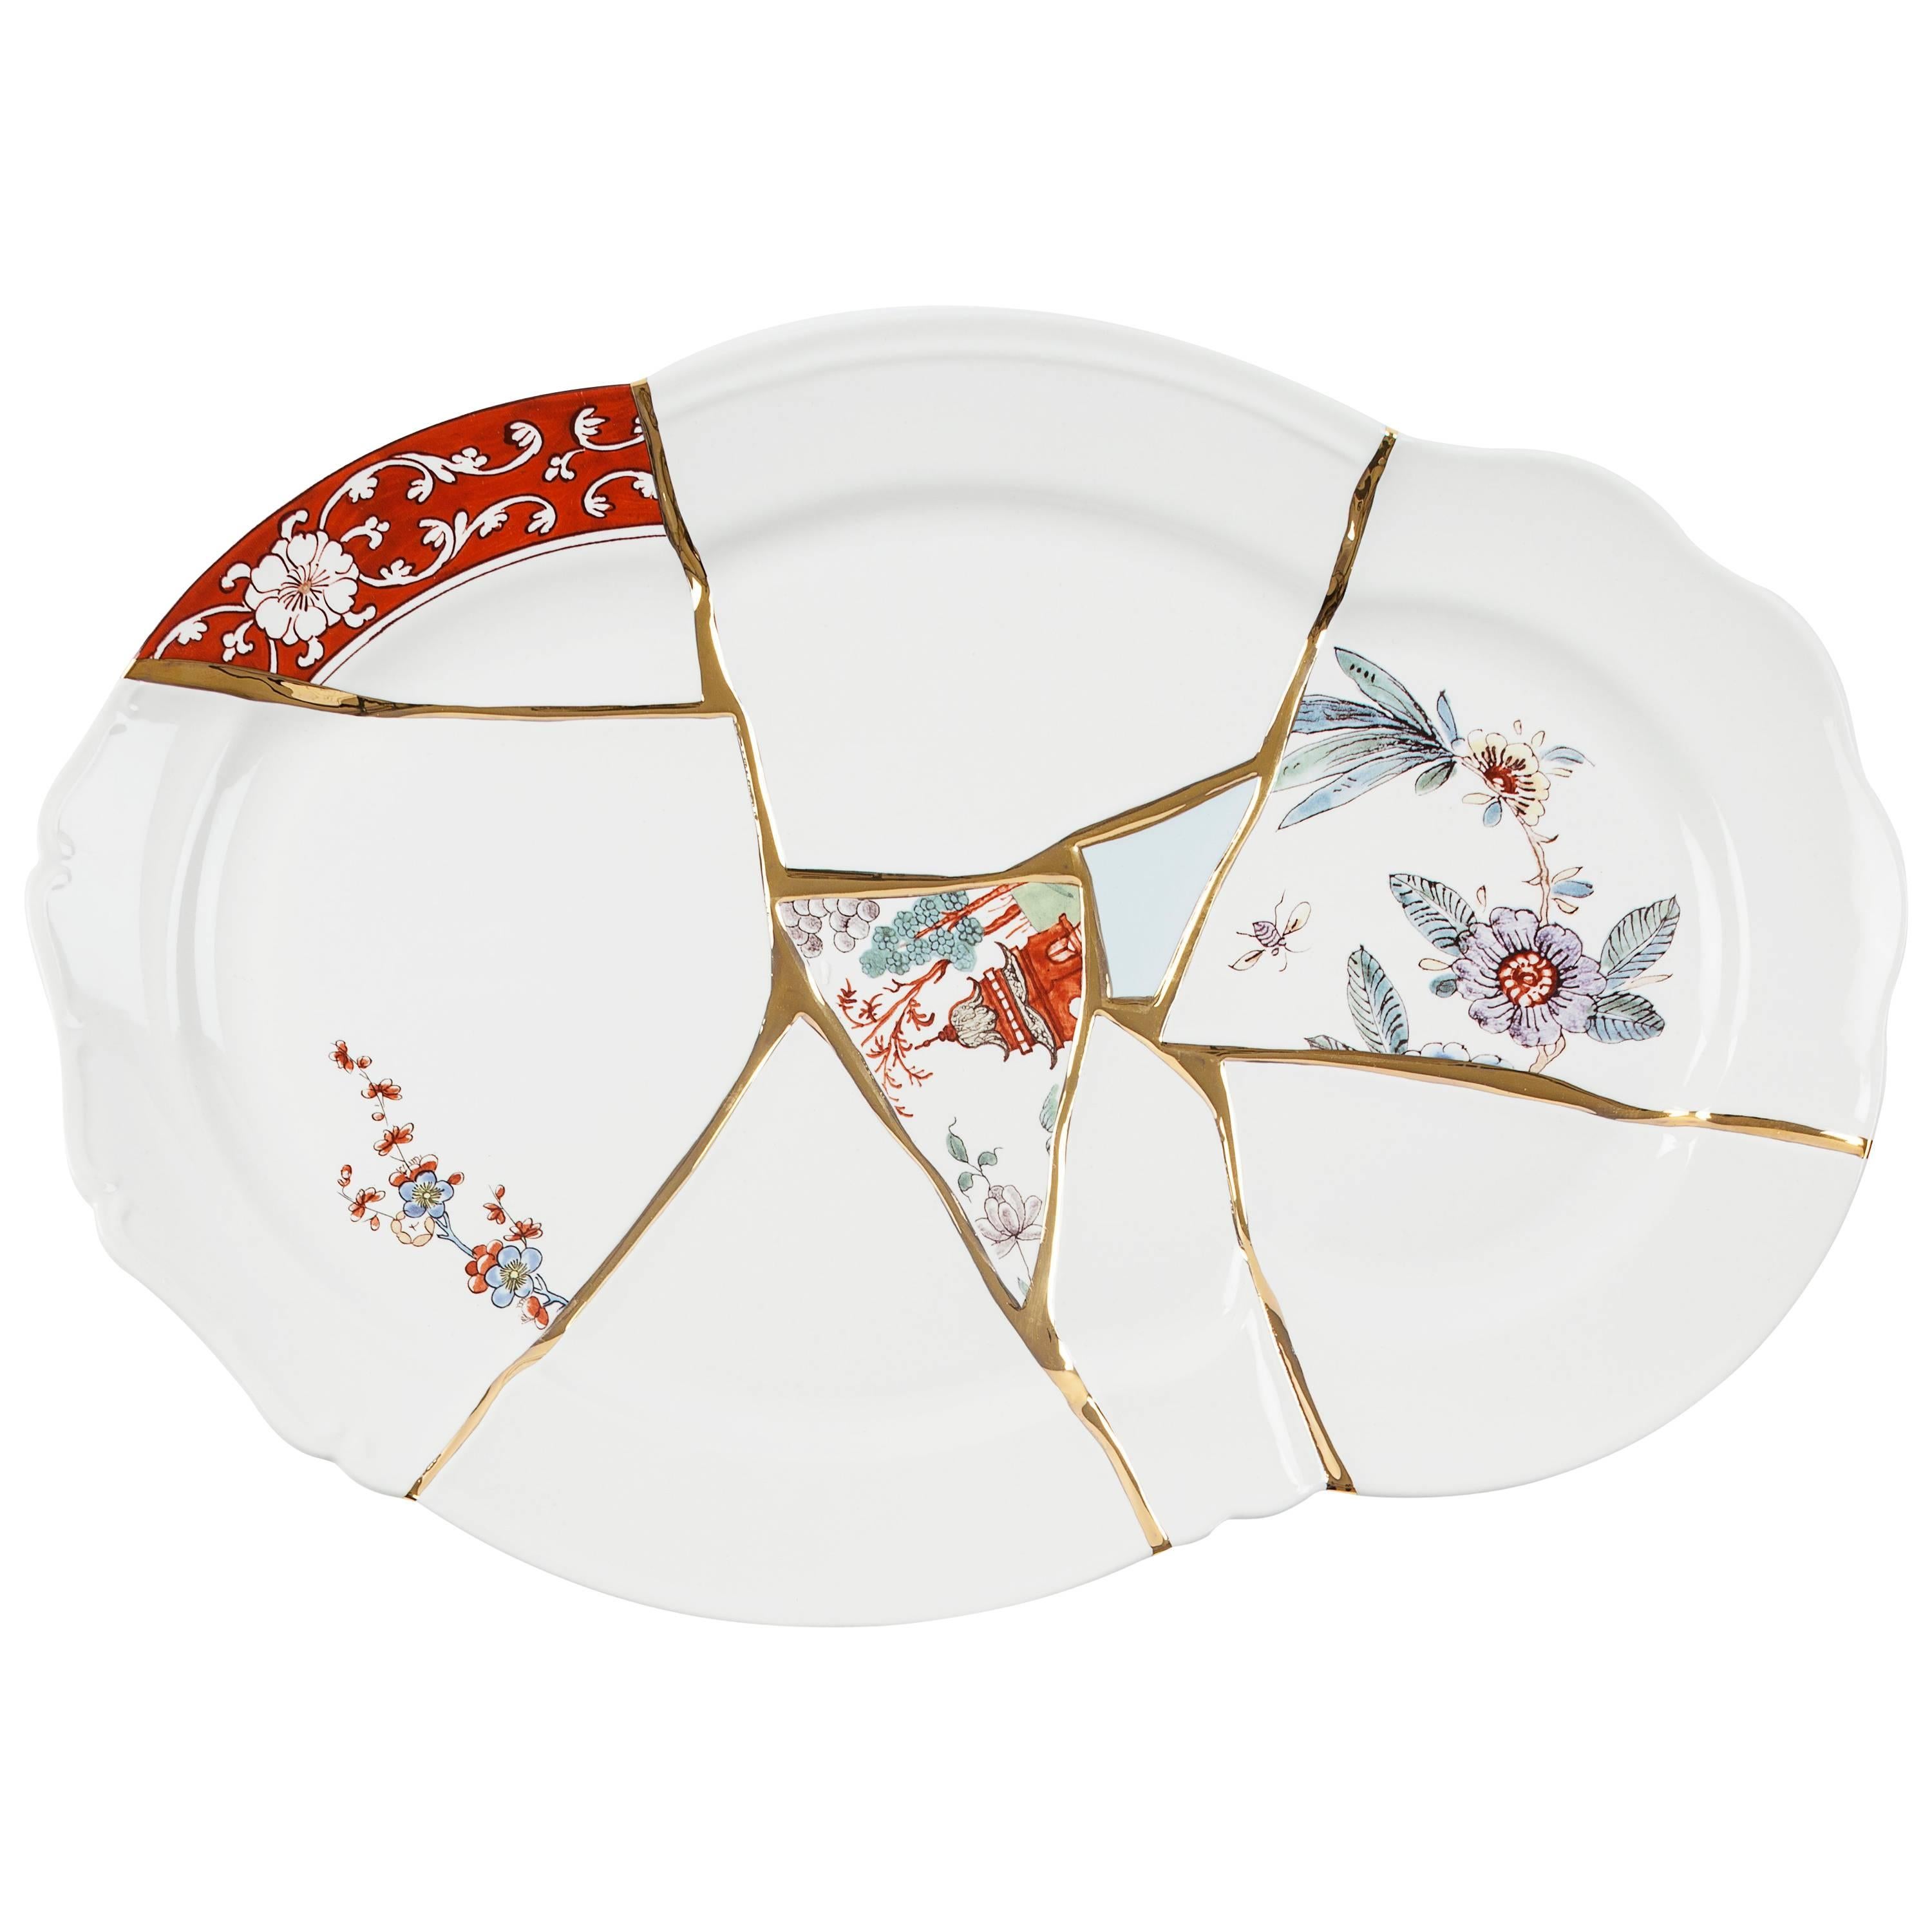 Seletti "Kintsugi" Tray in Porcelain